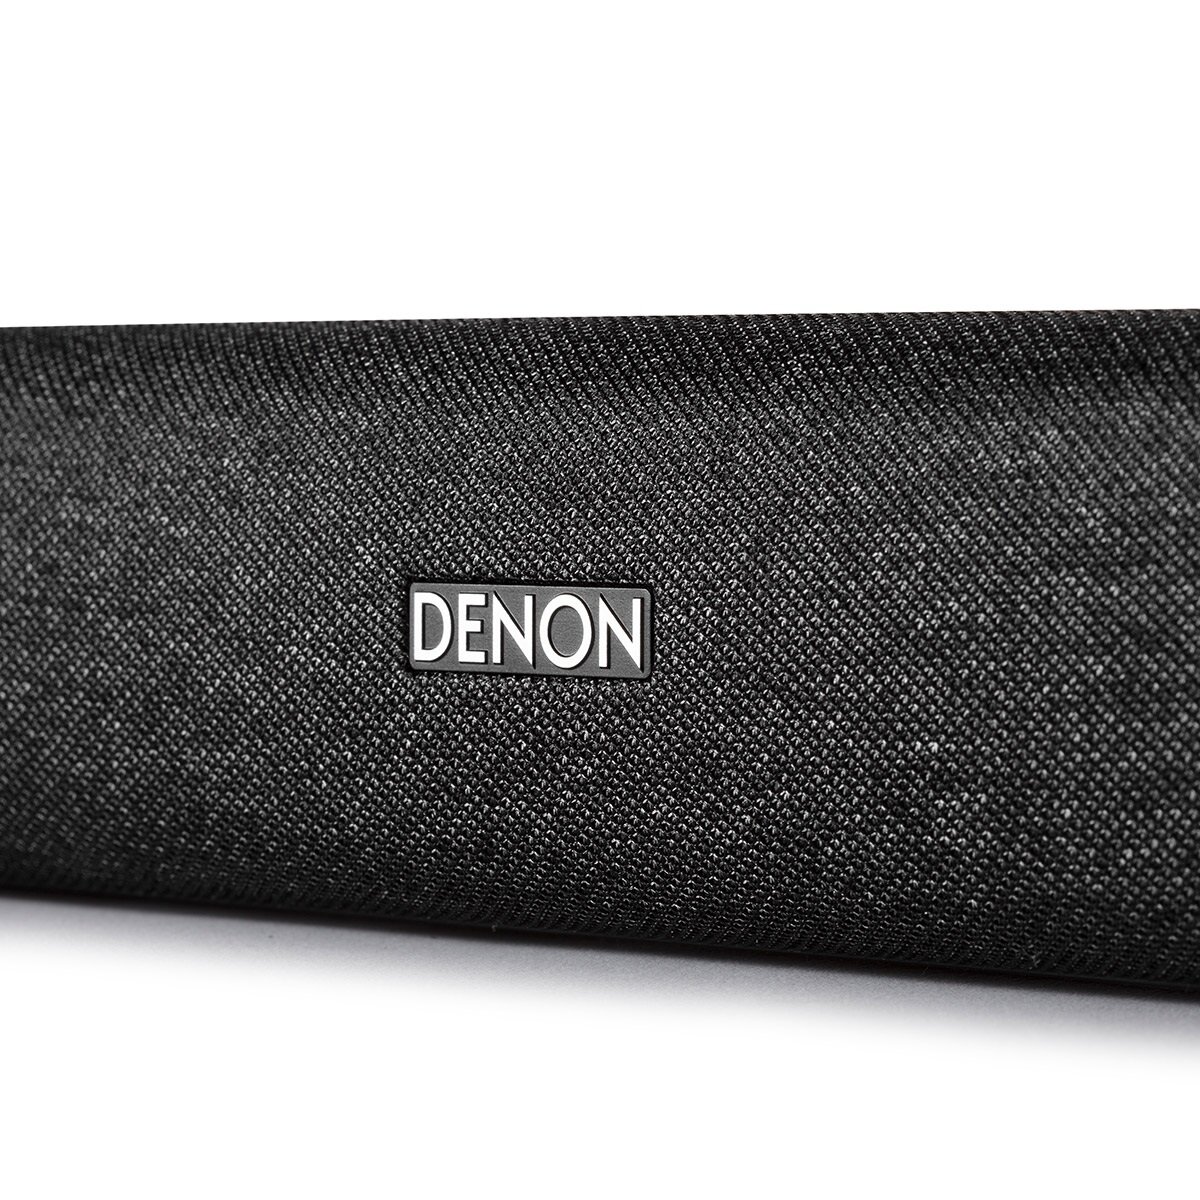 Soundbar Denon DHT-S416 Bluetooth pod skosem z widocznym logo Denon